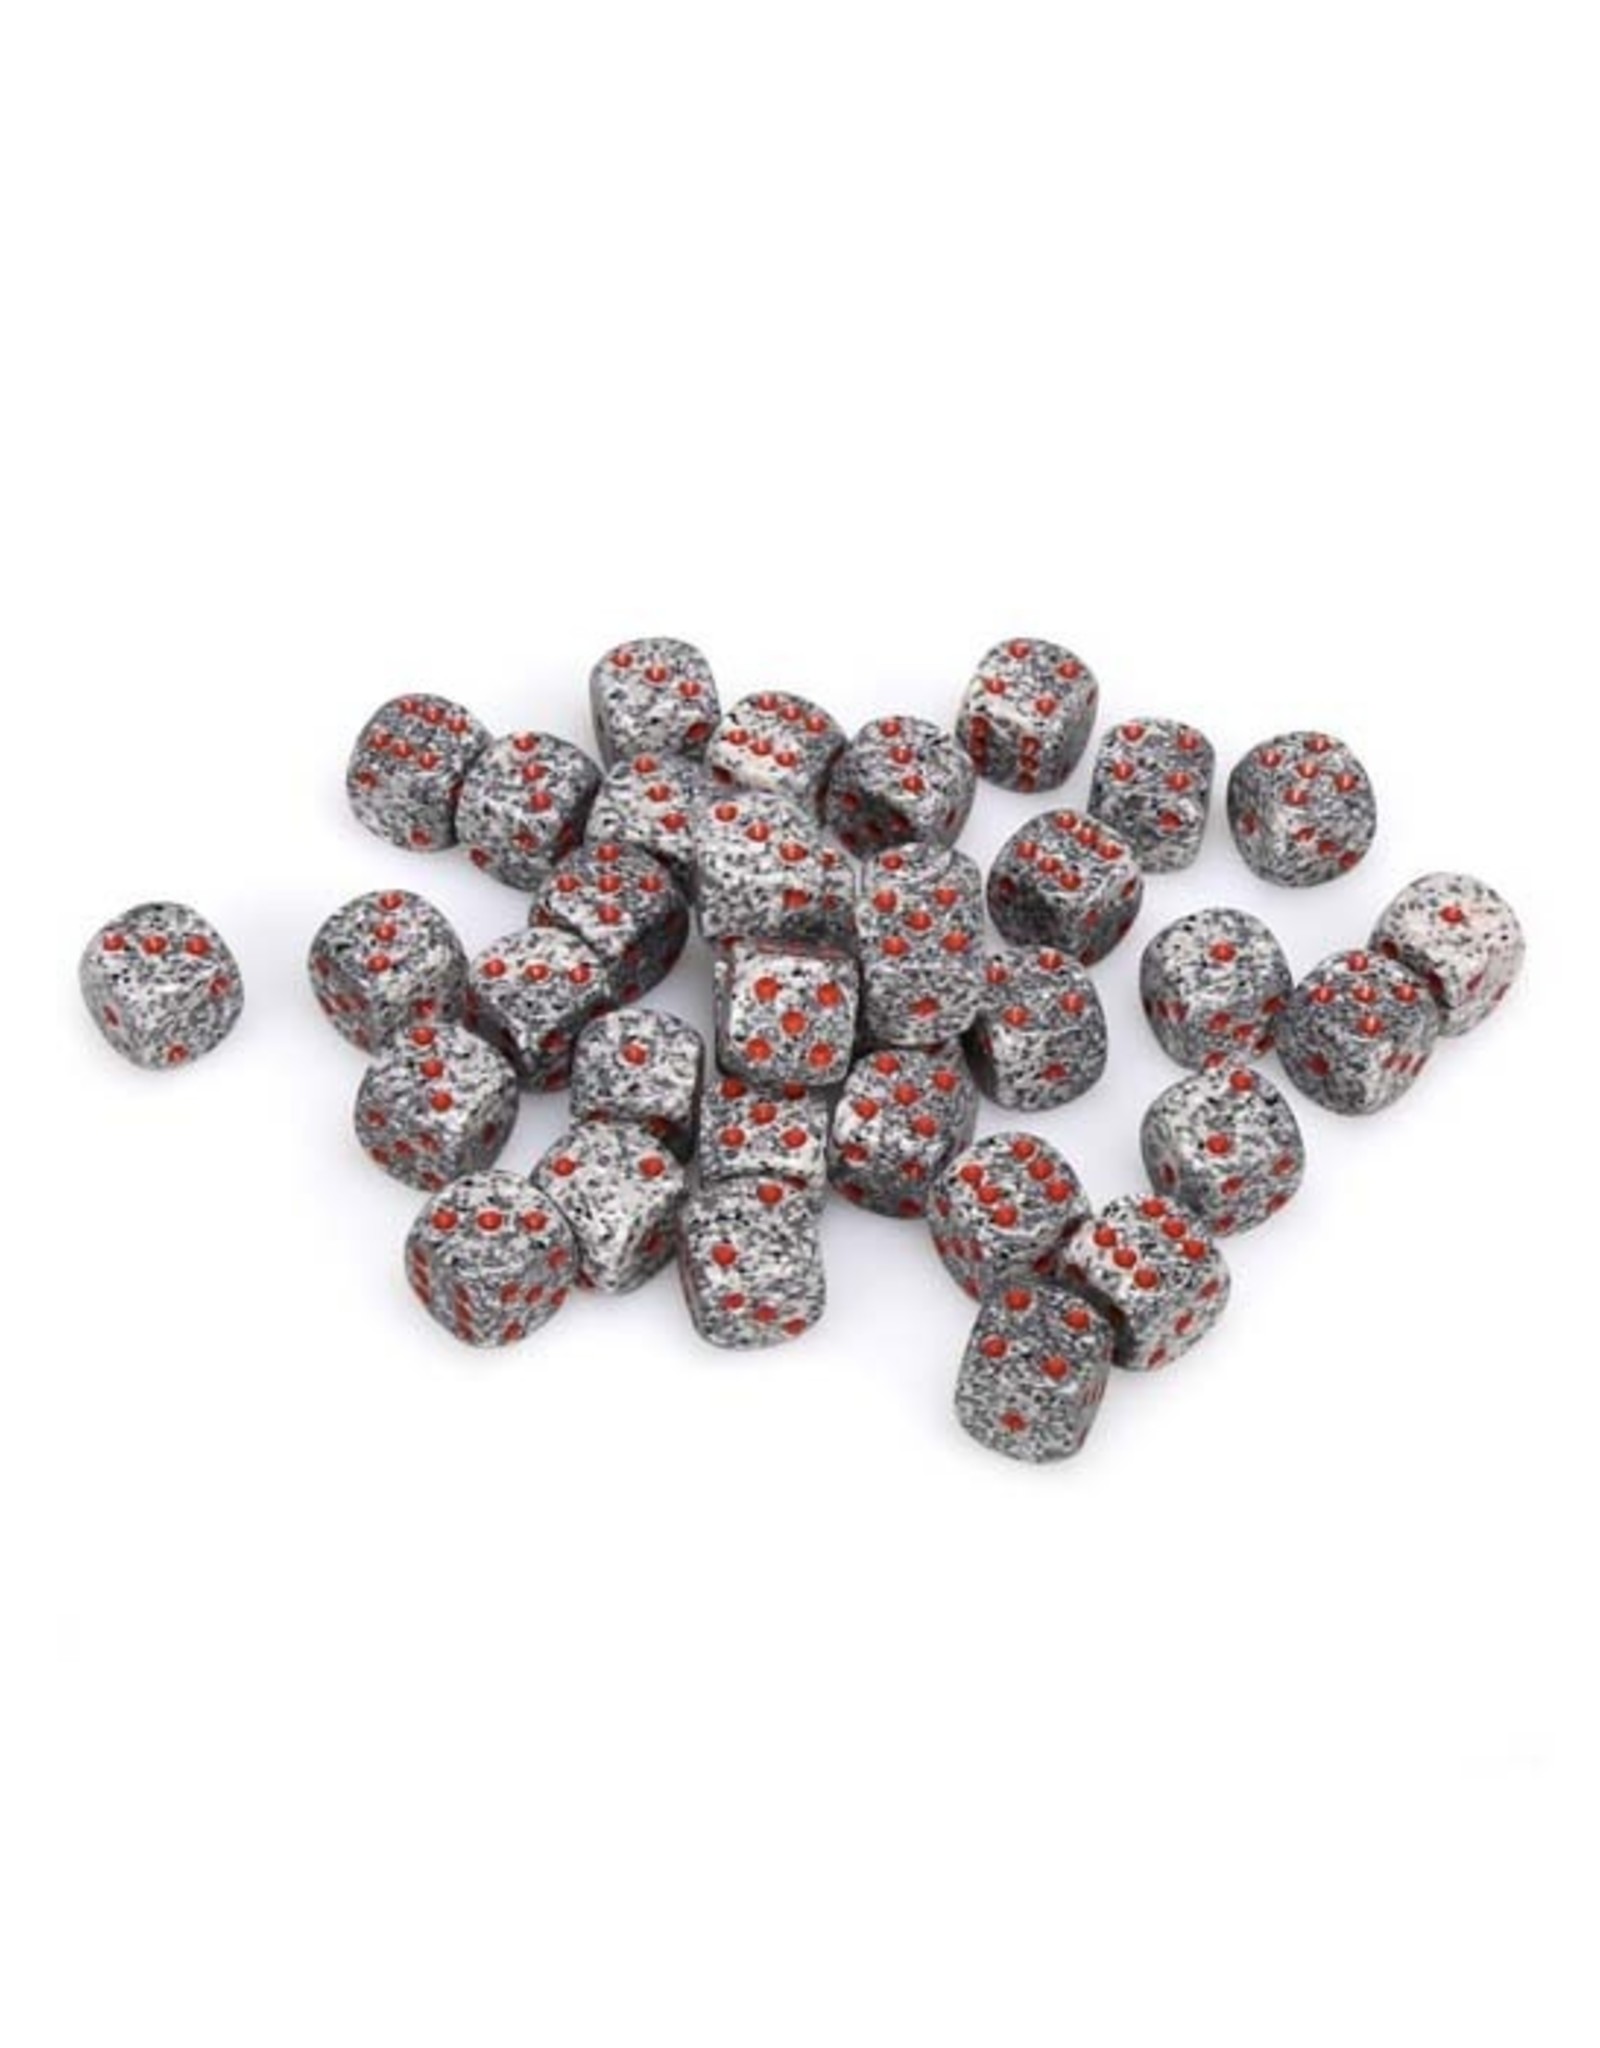 Chessex Chessex: 12mm D6 - Speckled - Granite